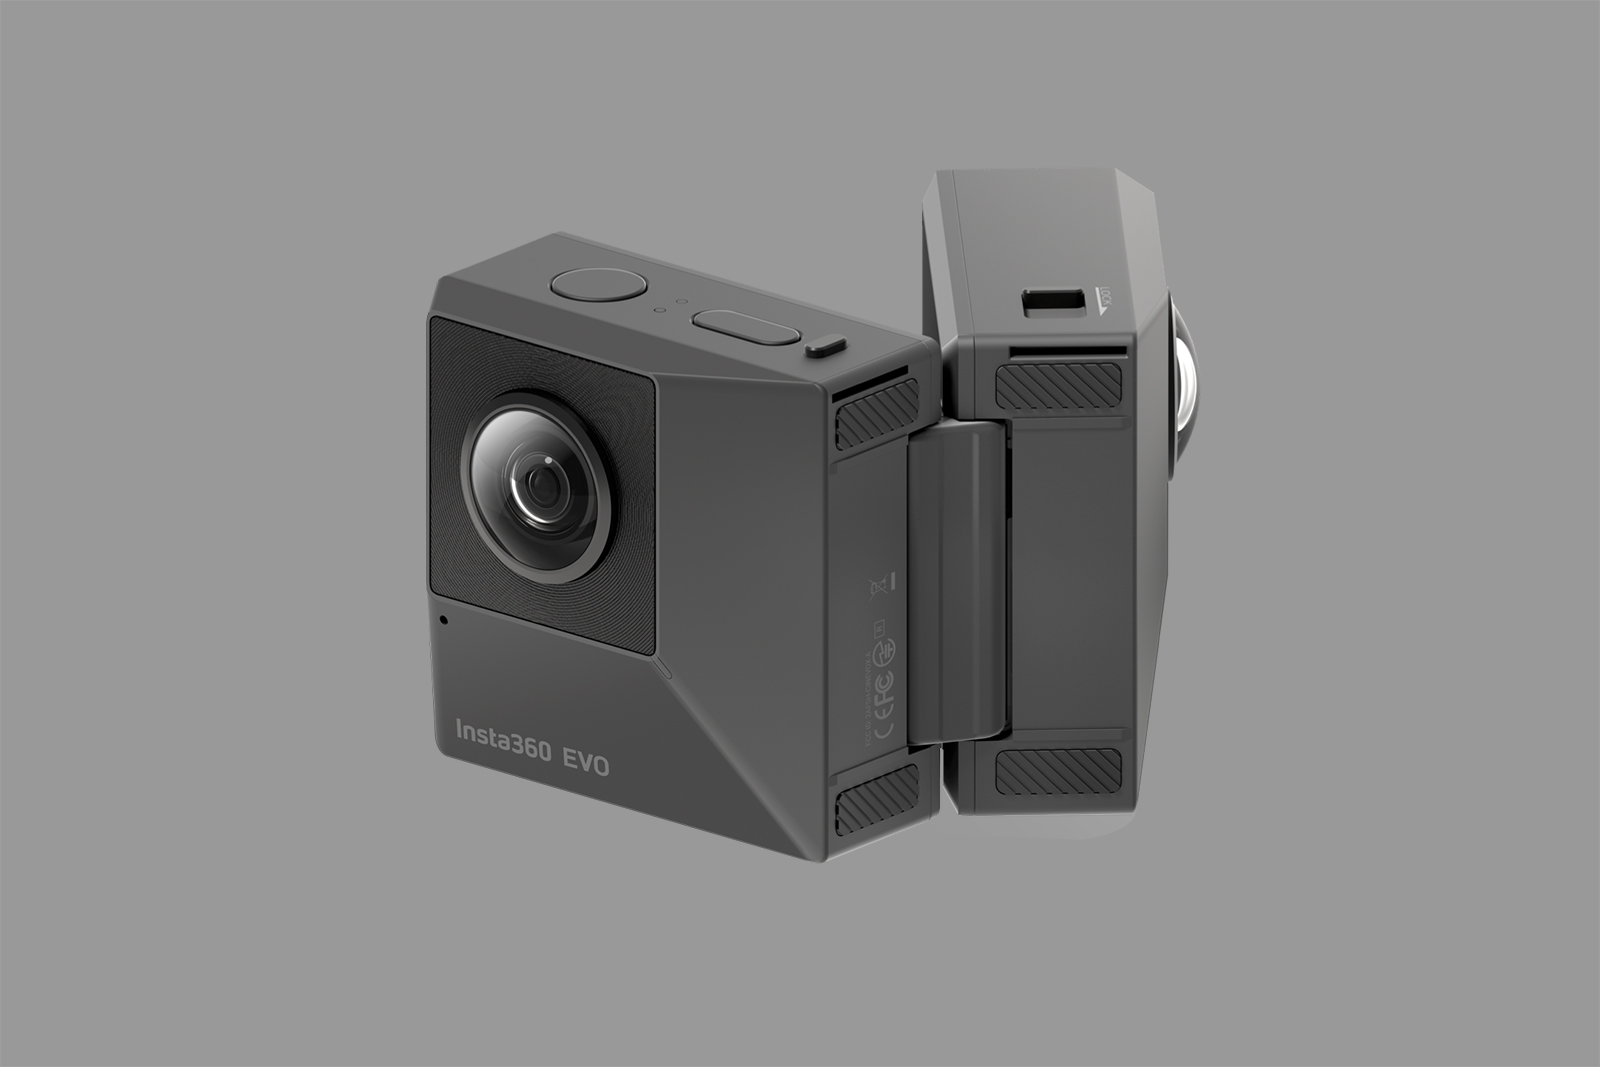 Forget Folding Phones, the Insta360 EVO Camera Folds to Shoot 360